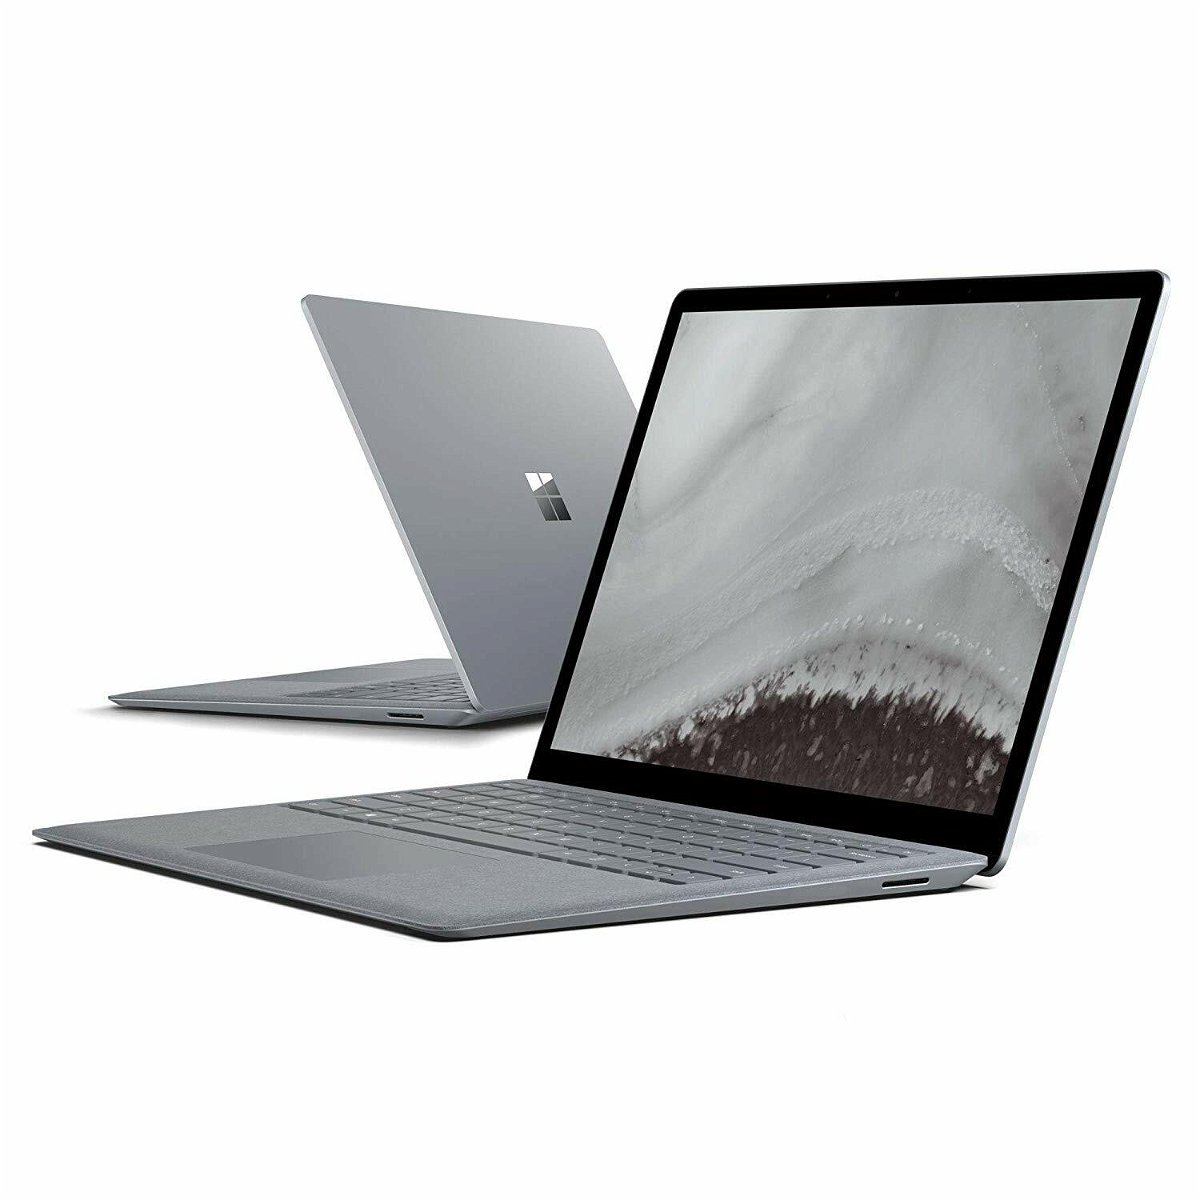 Microsoft Surface Laptop 2